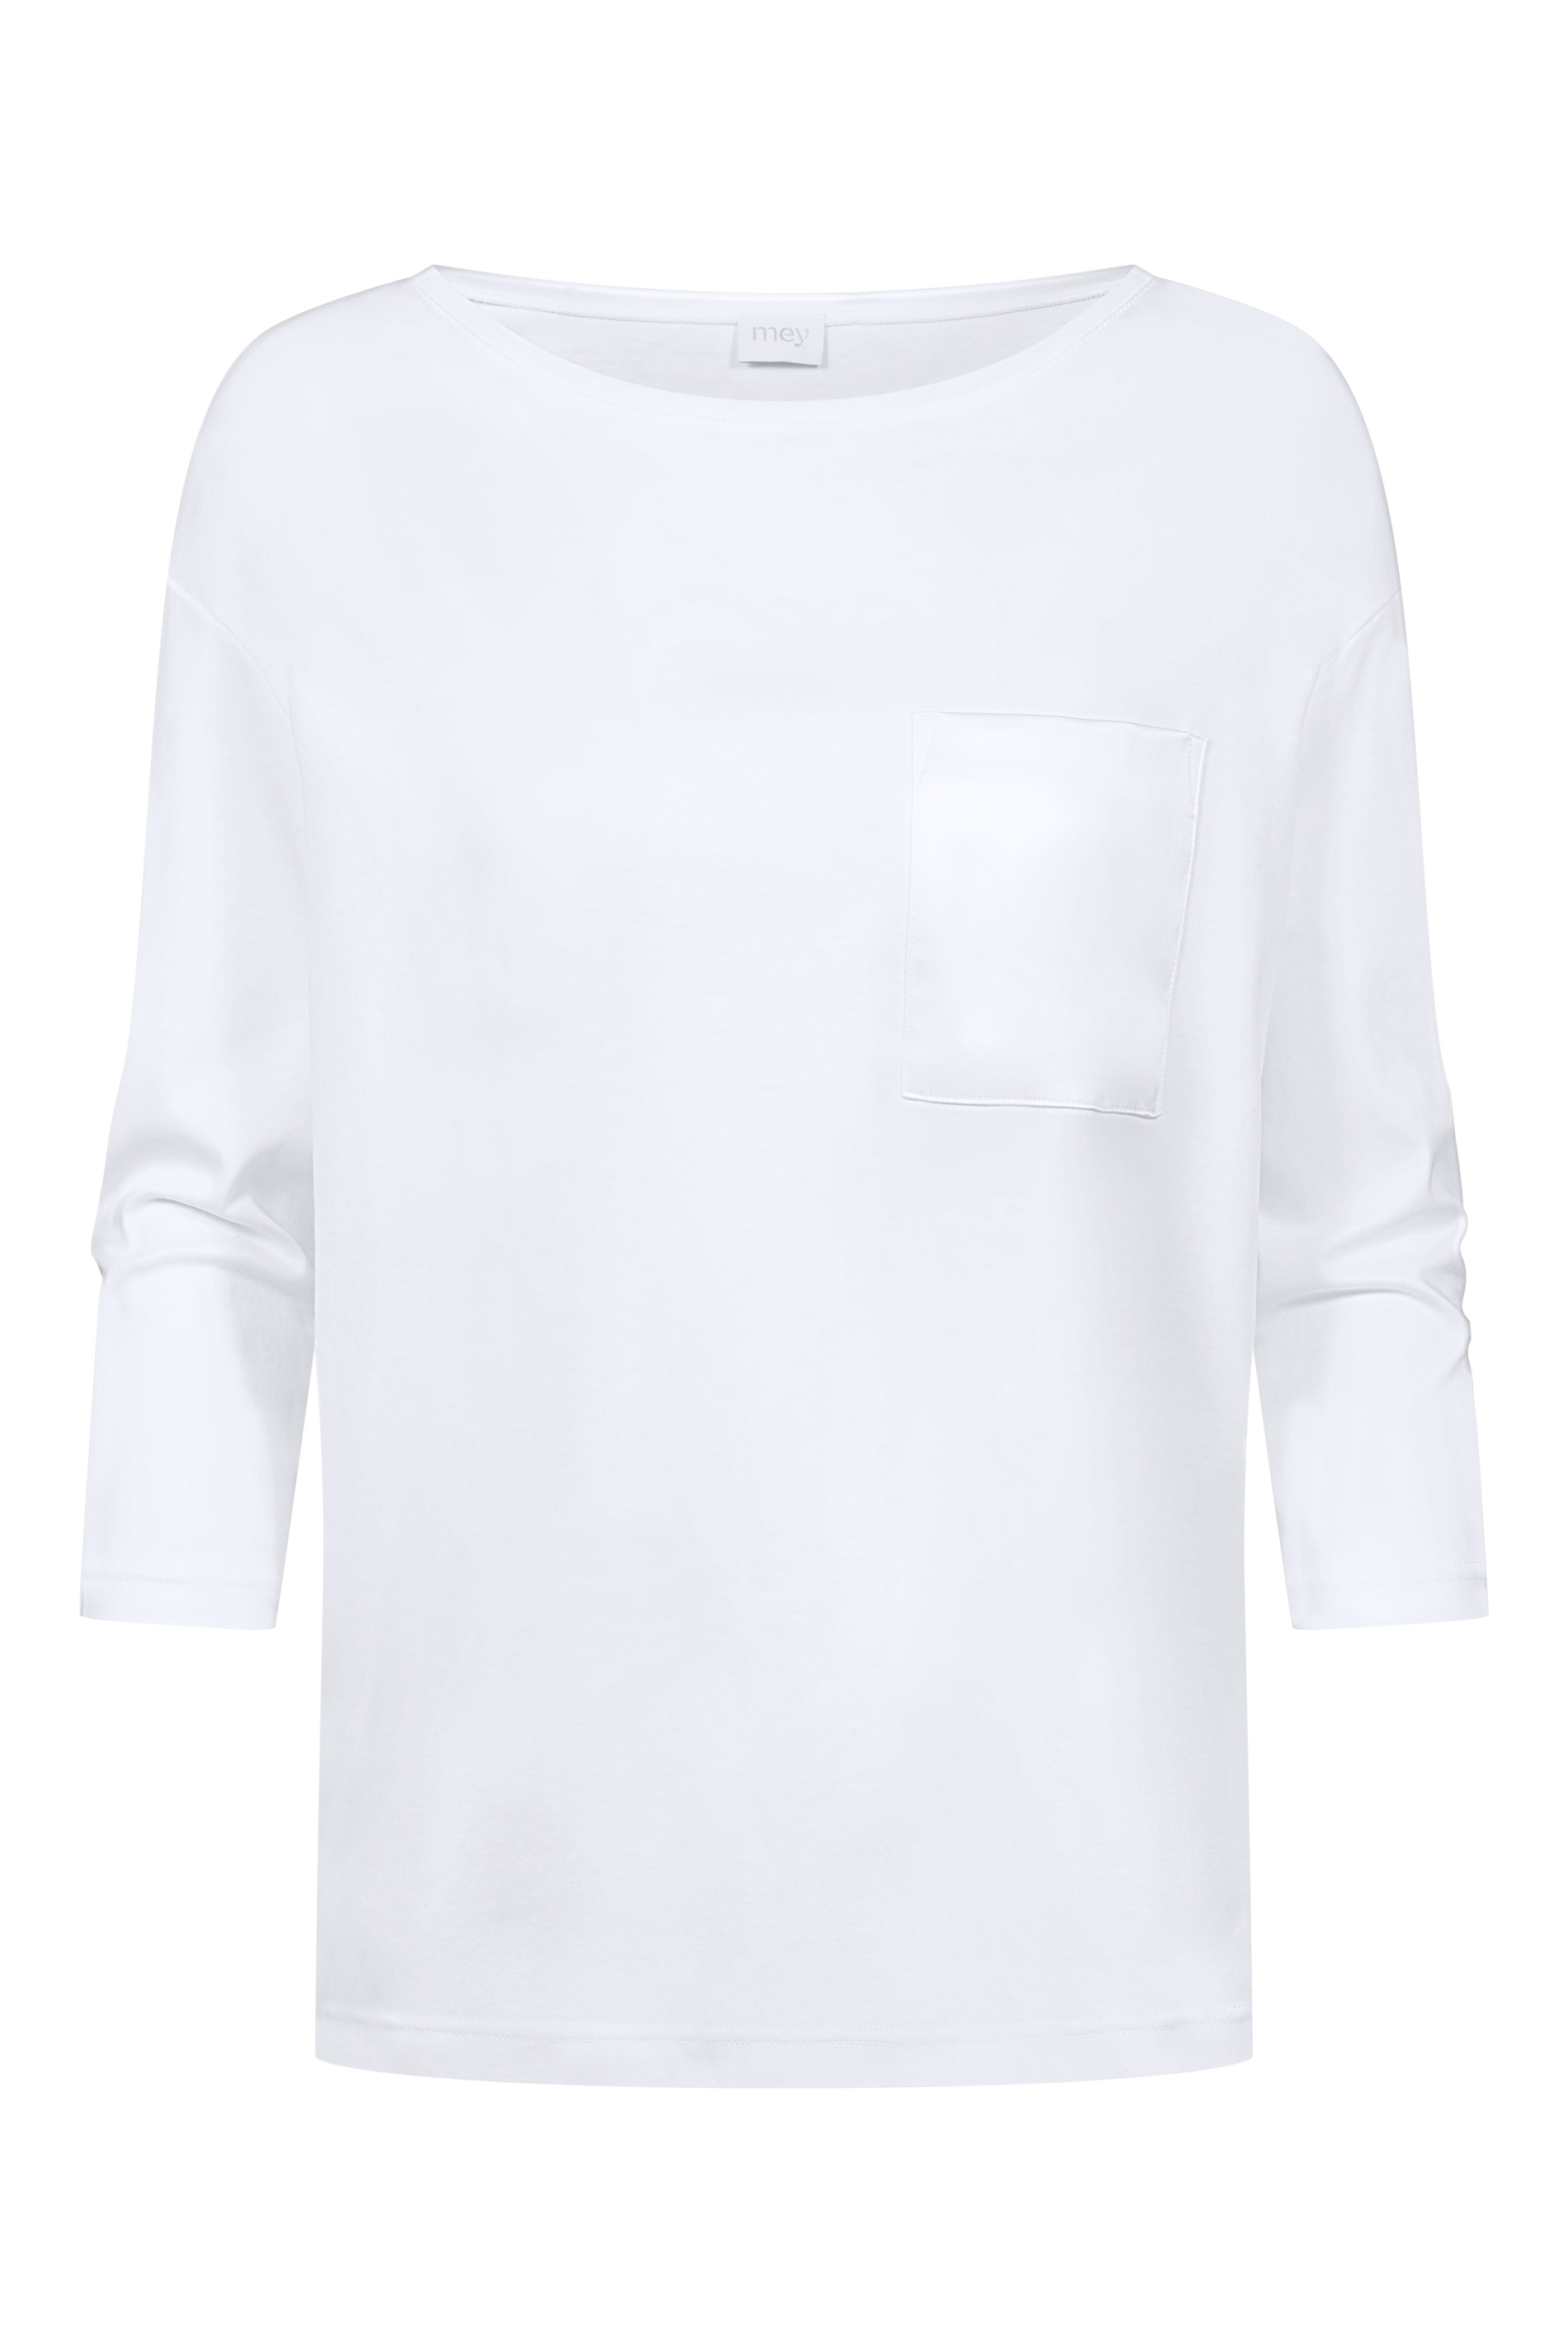 Shirt White Serie Sleepsation Cut Out | mey®